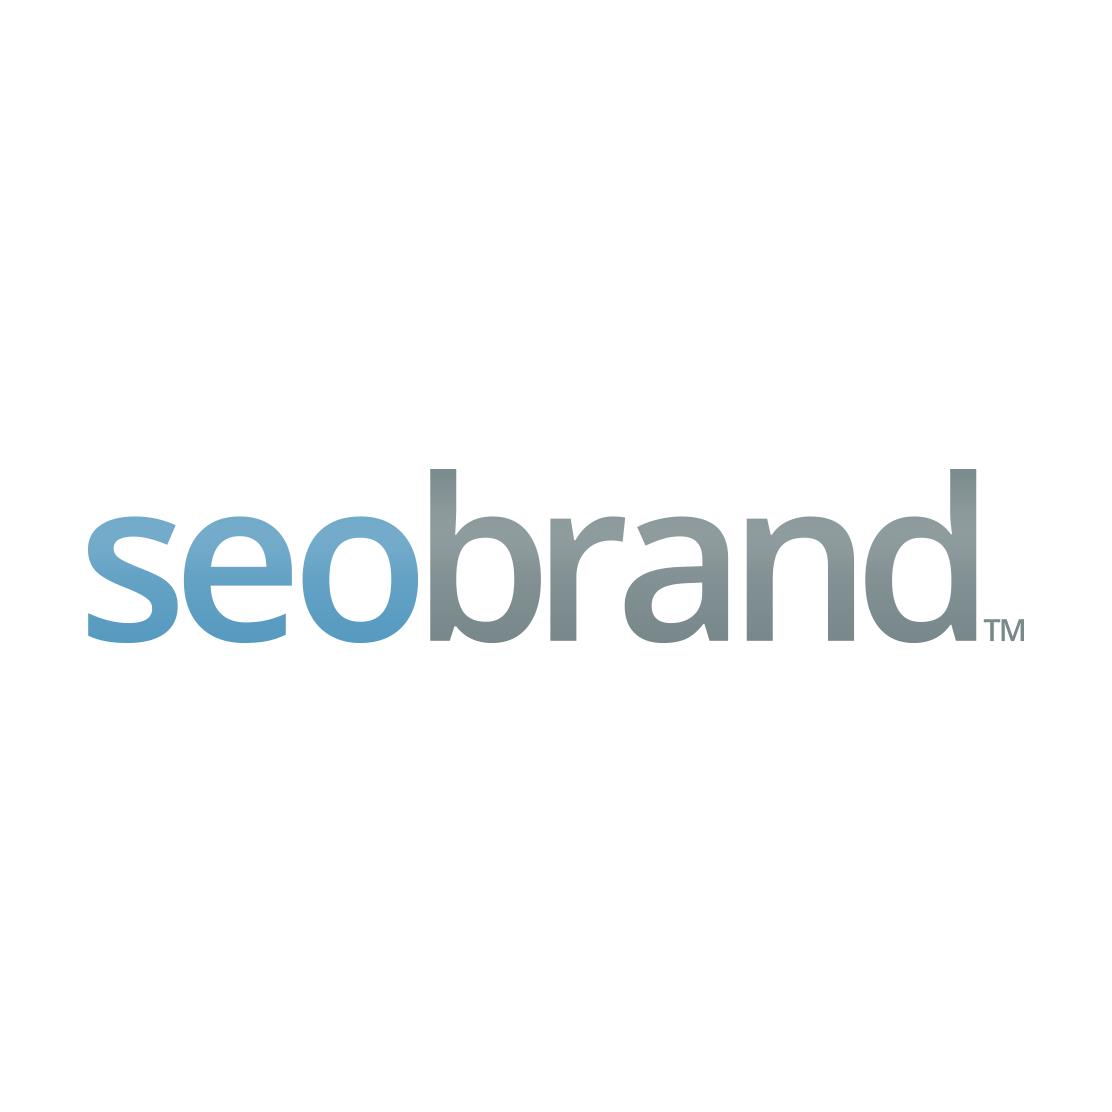 Top SMM Company Logo: SEO Brand